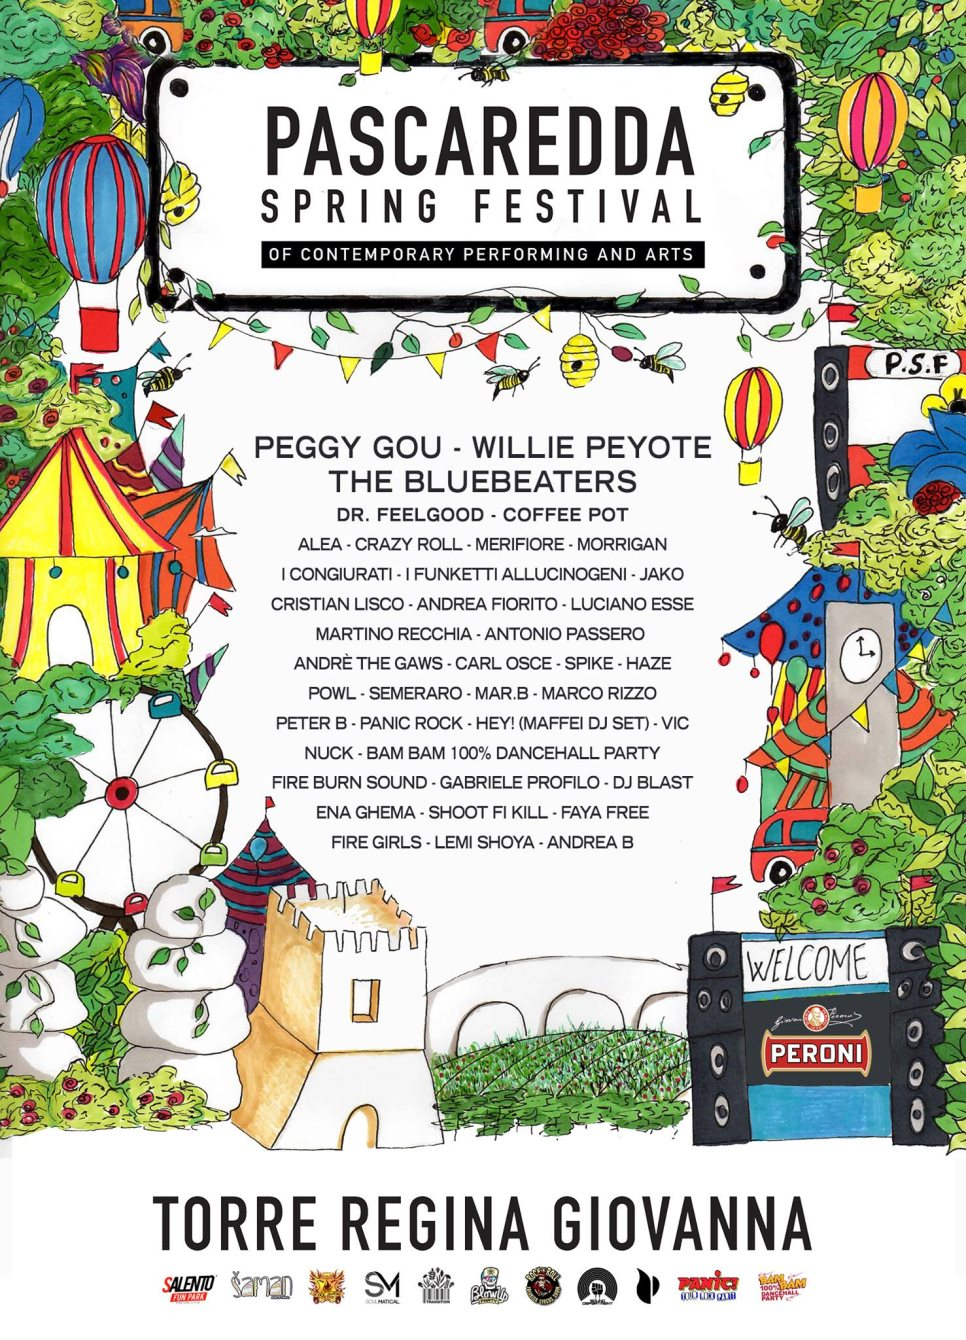 Pascaredda Spring Festival - Flyer back